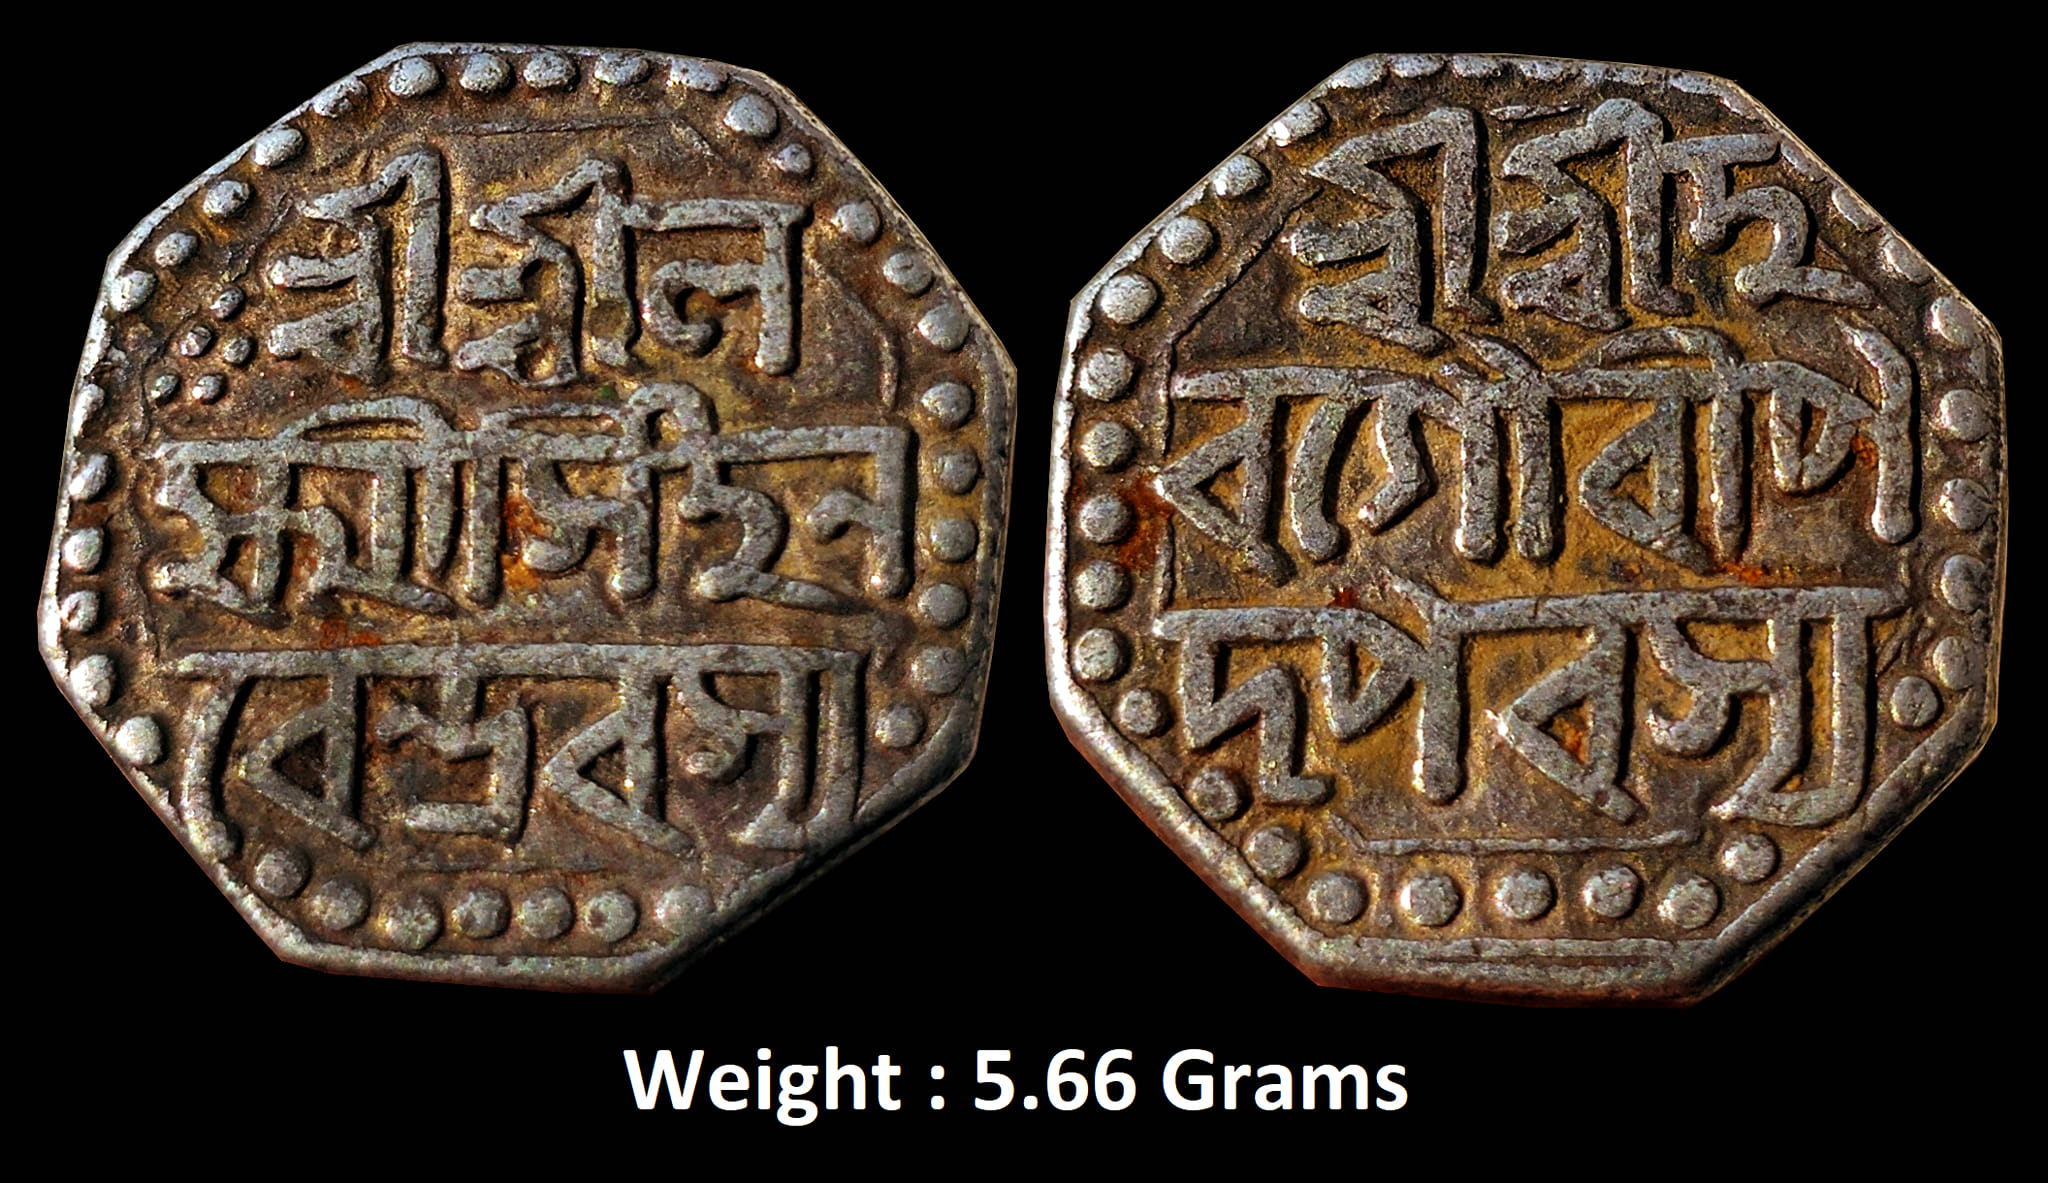 Assam, Lakshmi Simha, Sliver 1/2 Rupee,
Obv: assamese legend "sri sri ha/ri hara pada/parasya",
Rev: assamese legend "sri sri la/kshmi simha na/rendrasya" arc of dots upper left,
Weight : 5.66 Grams